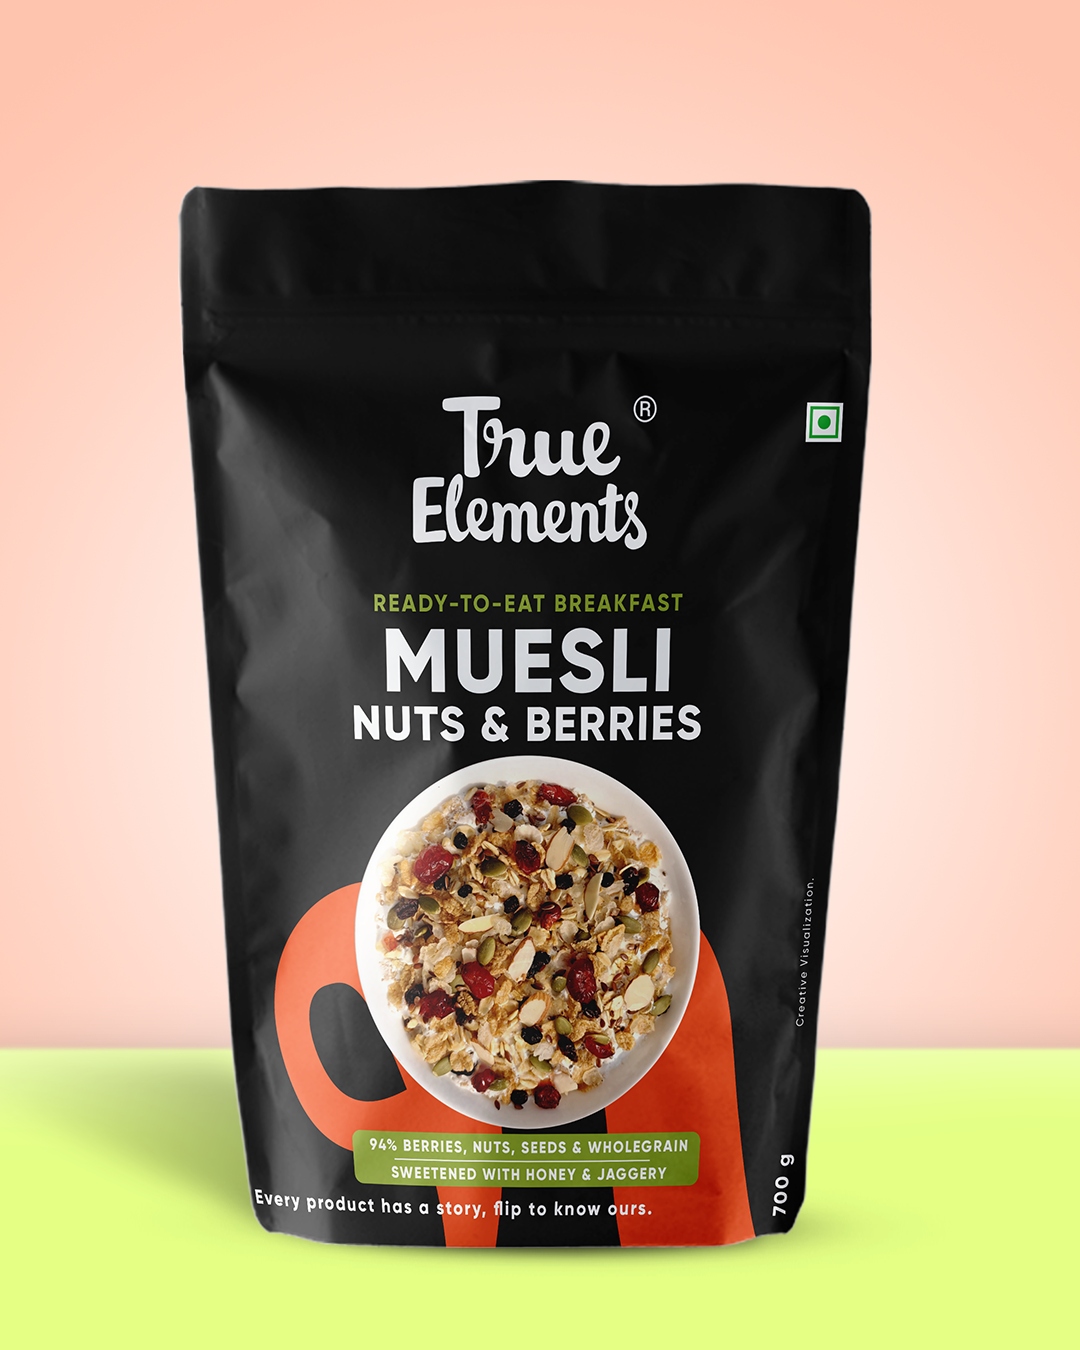 True Elements Crunchy Nuts And Berries Muesli Image